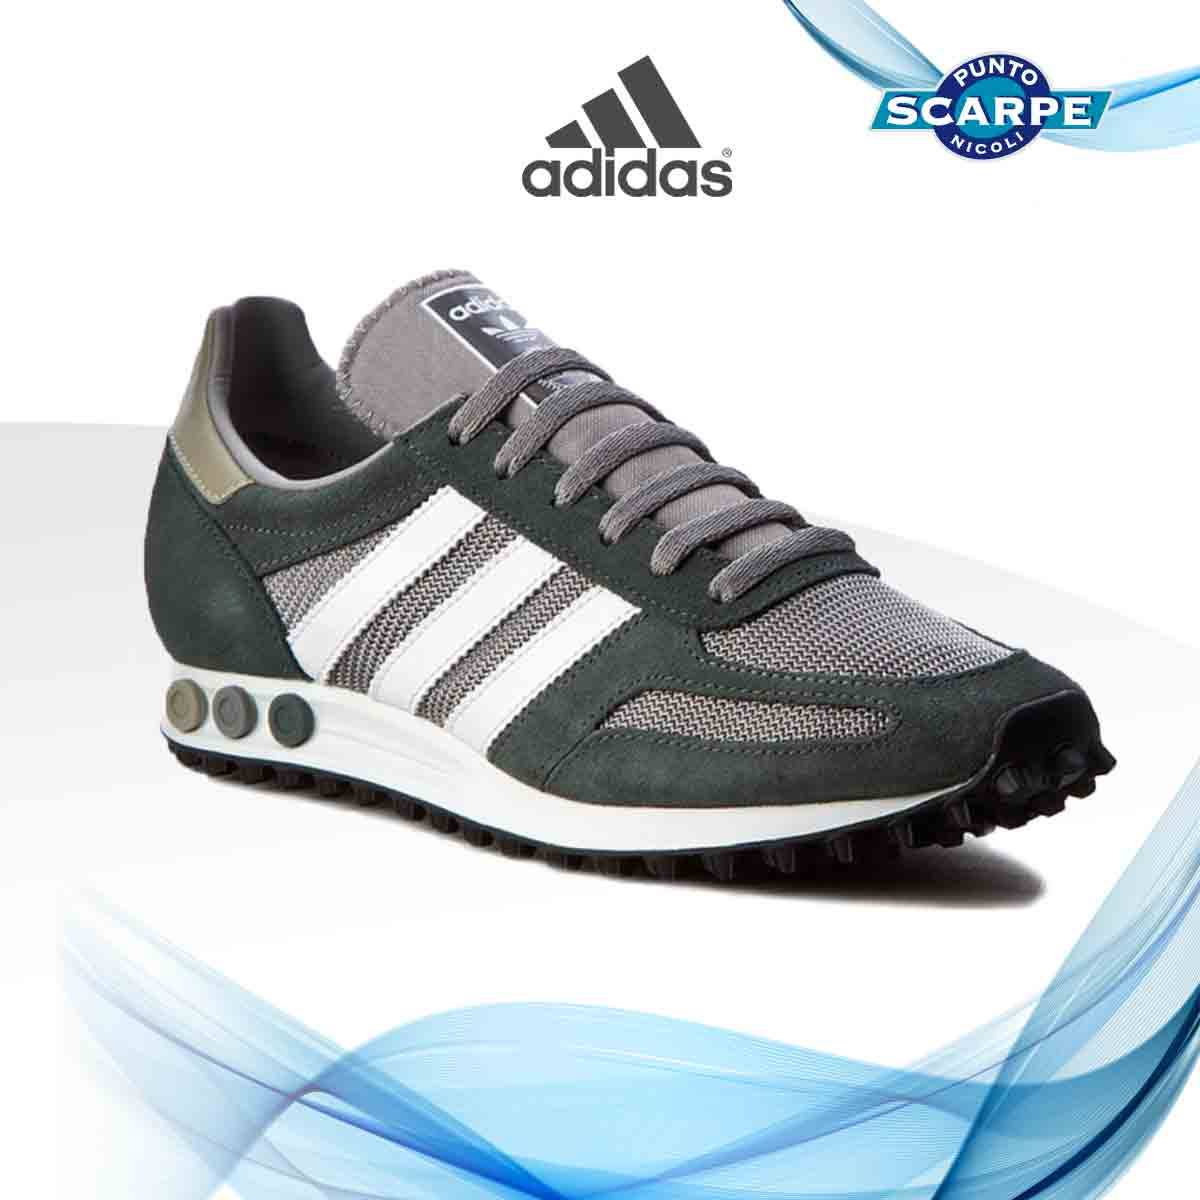 Adidas scarpa uomo | puntoscarpenicoli